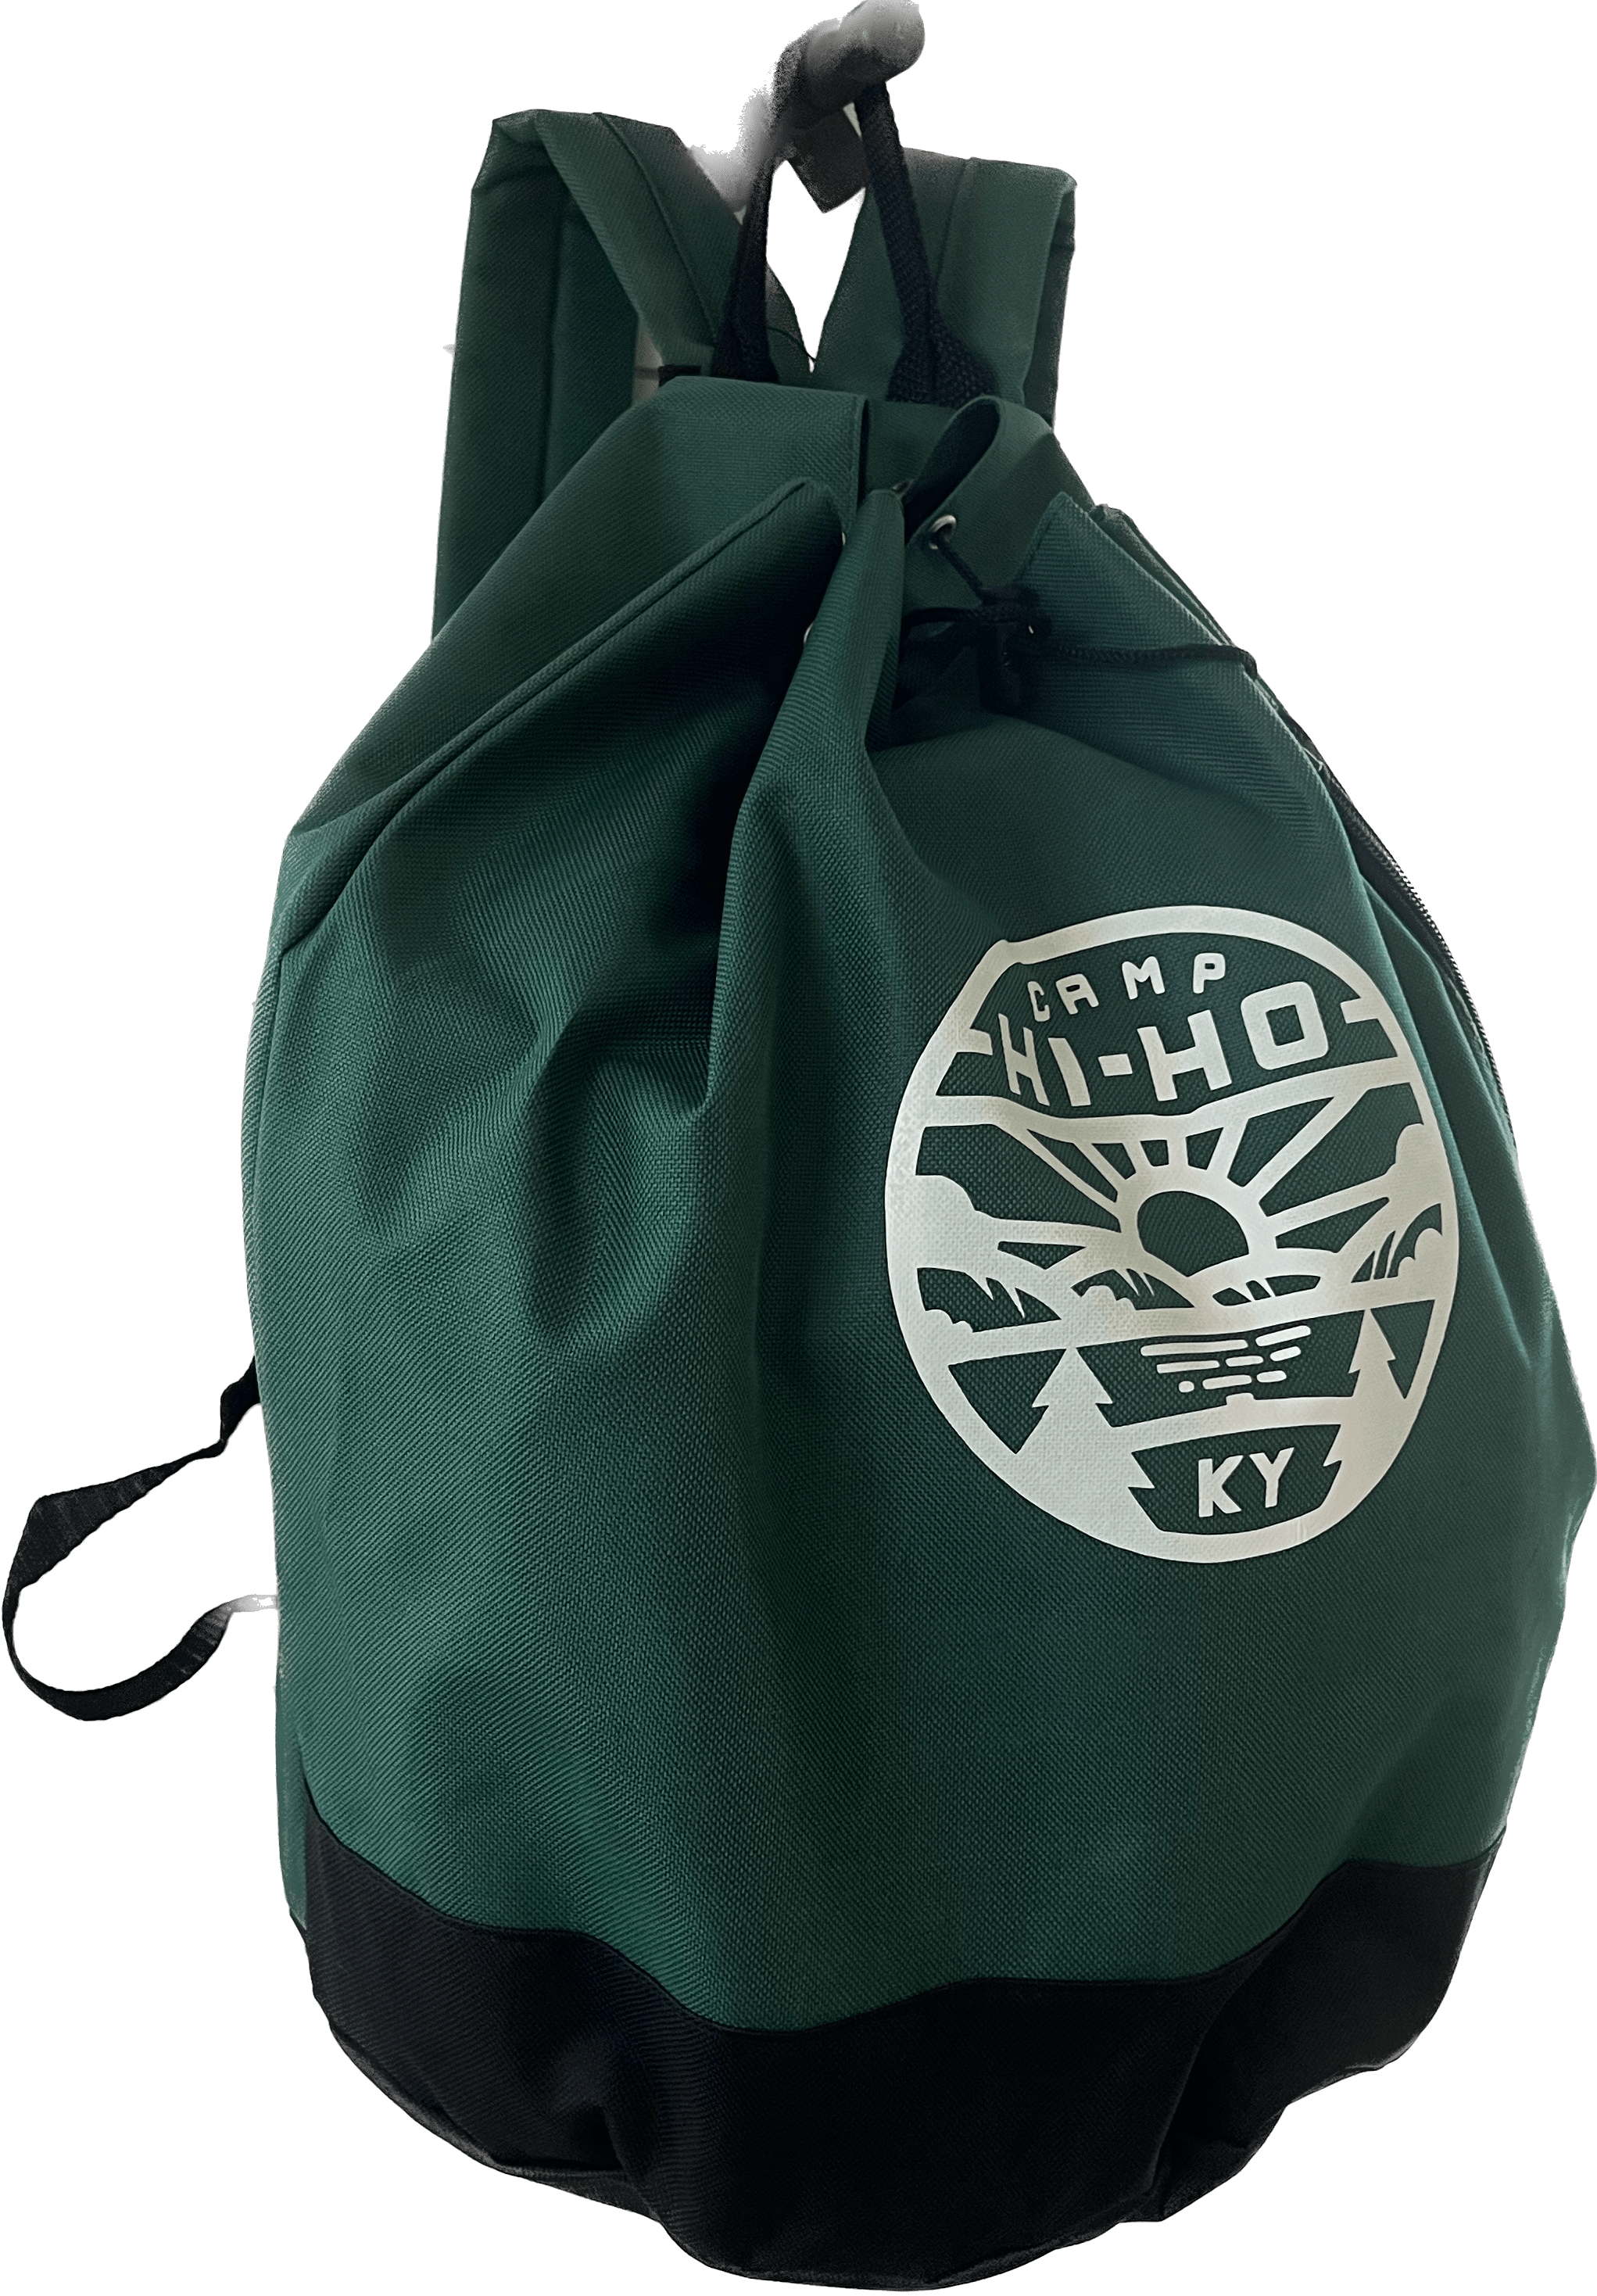 palm merchant Blur Green Camper Backpack - Camp Hi-Ho